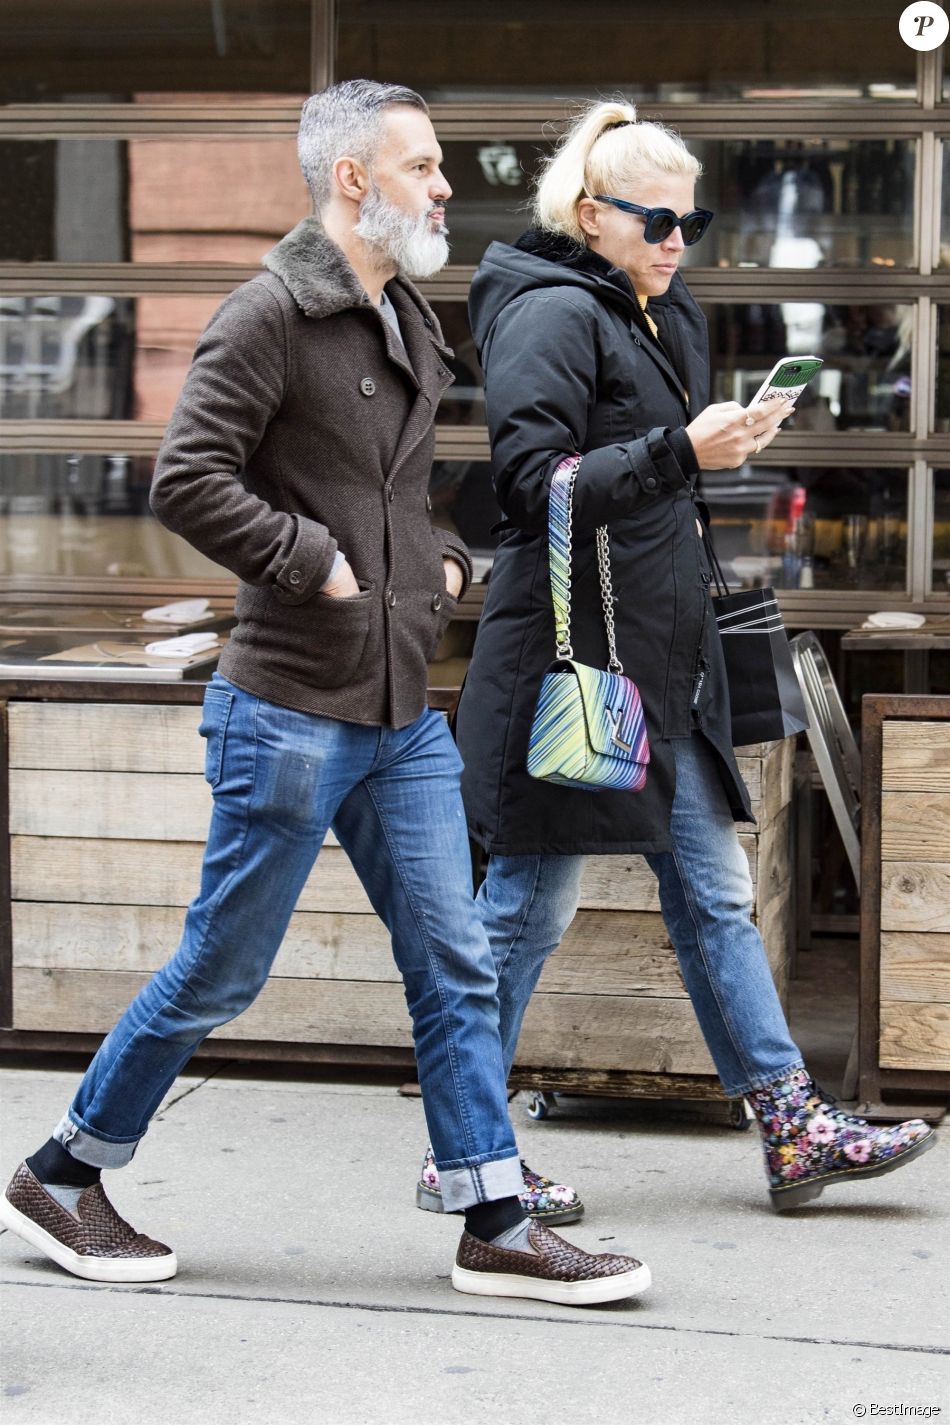 Exclusif - Busy Phillips et son mari Marc Silverstein se promènent à New York le 13 avril 2018.